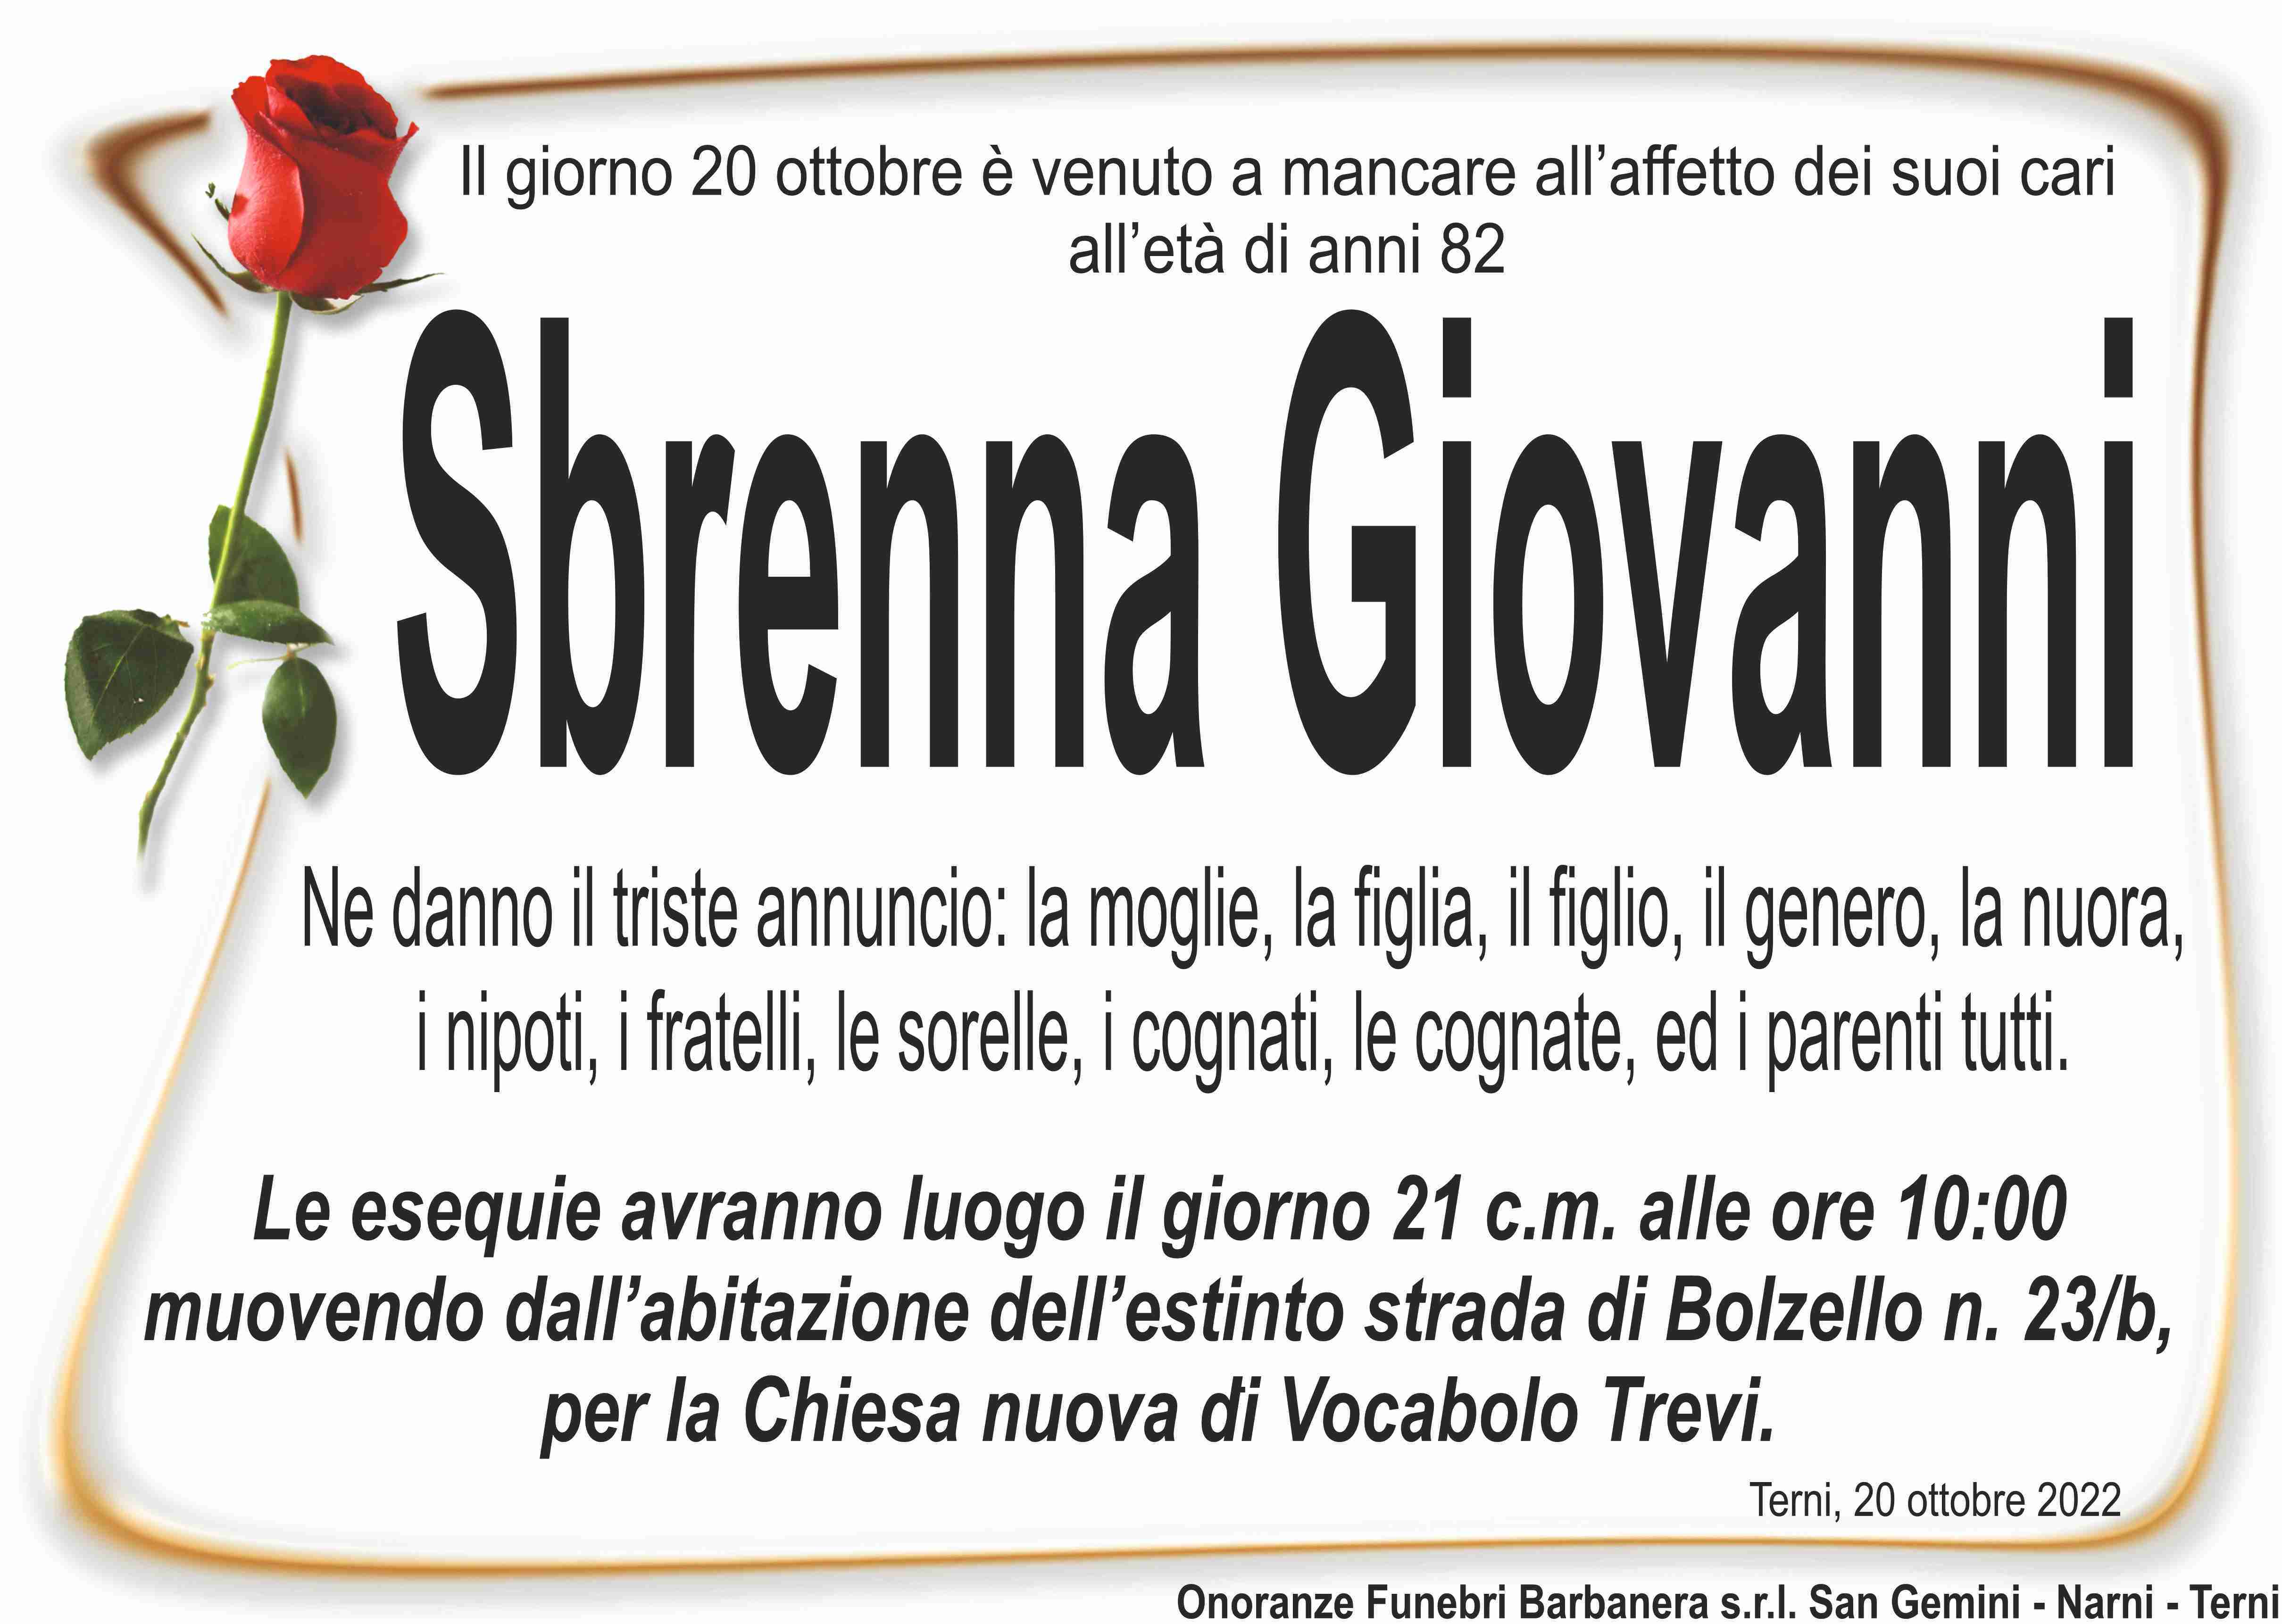 Giovanni Sbrenna